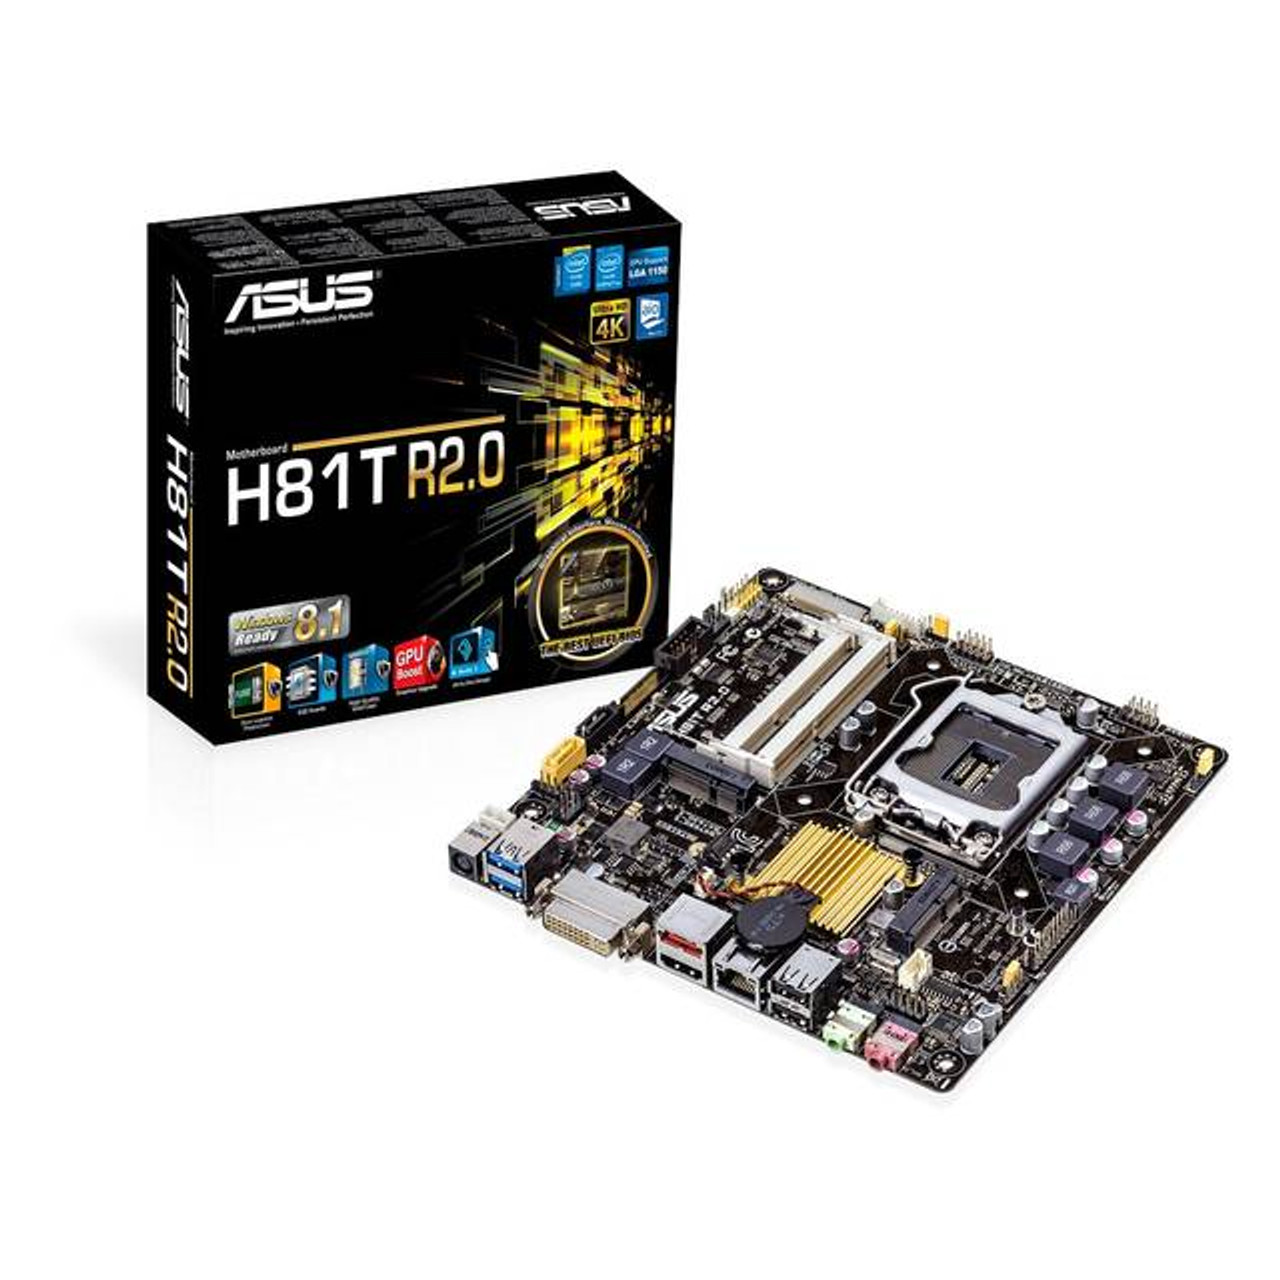 Asus H81T R2.0/CSM LGA1150/ Intel H81/ DDR3/ SATA3&USB3.0/ A&GbE/ Mini-ITX Motherboard